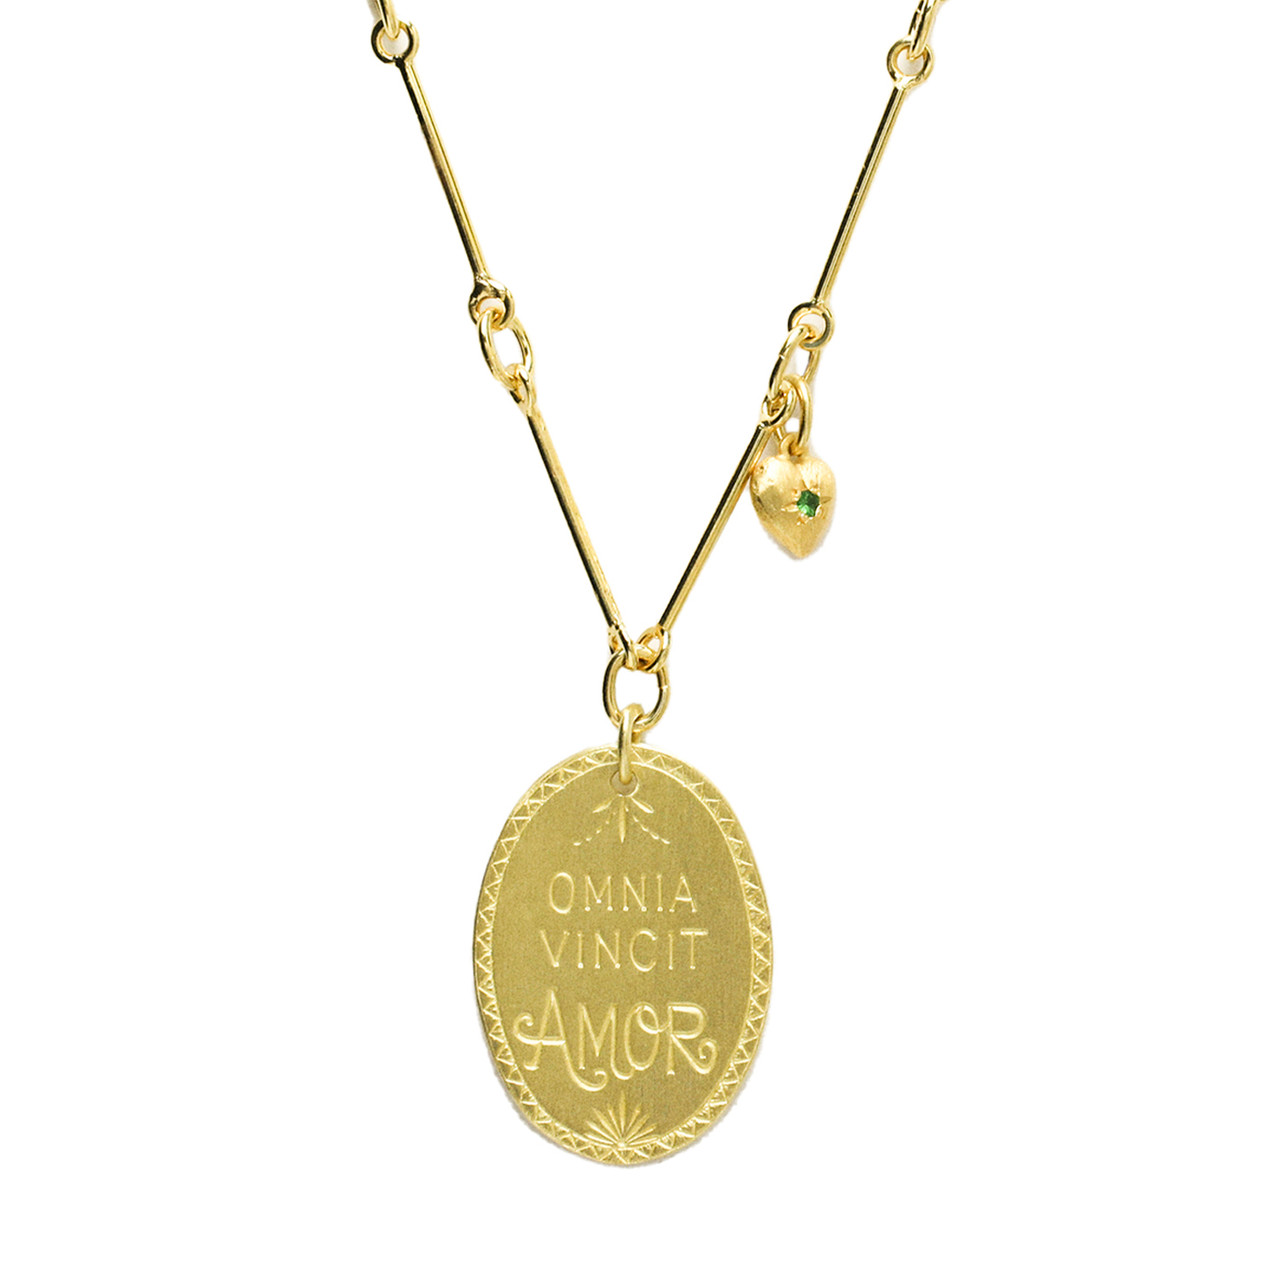 Gold Plated Omnia Vincit Tsavorite Pendant, Maria Beltran, tomfoolery